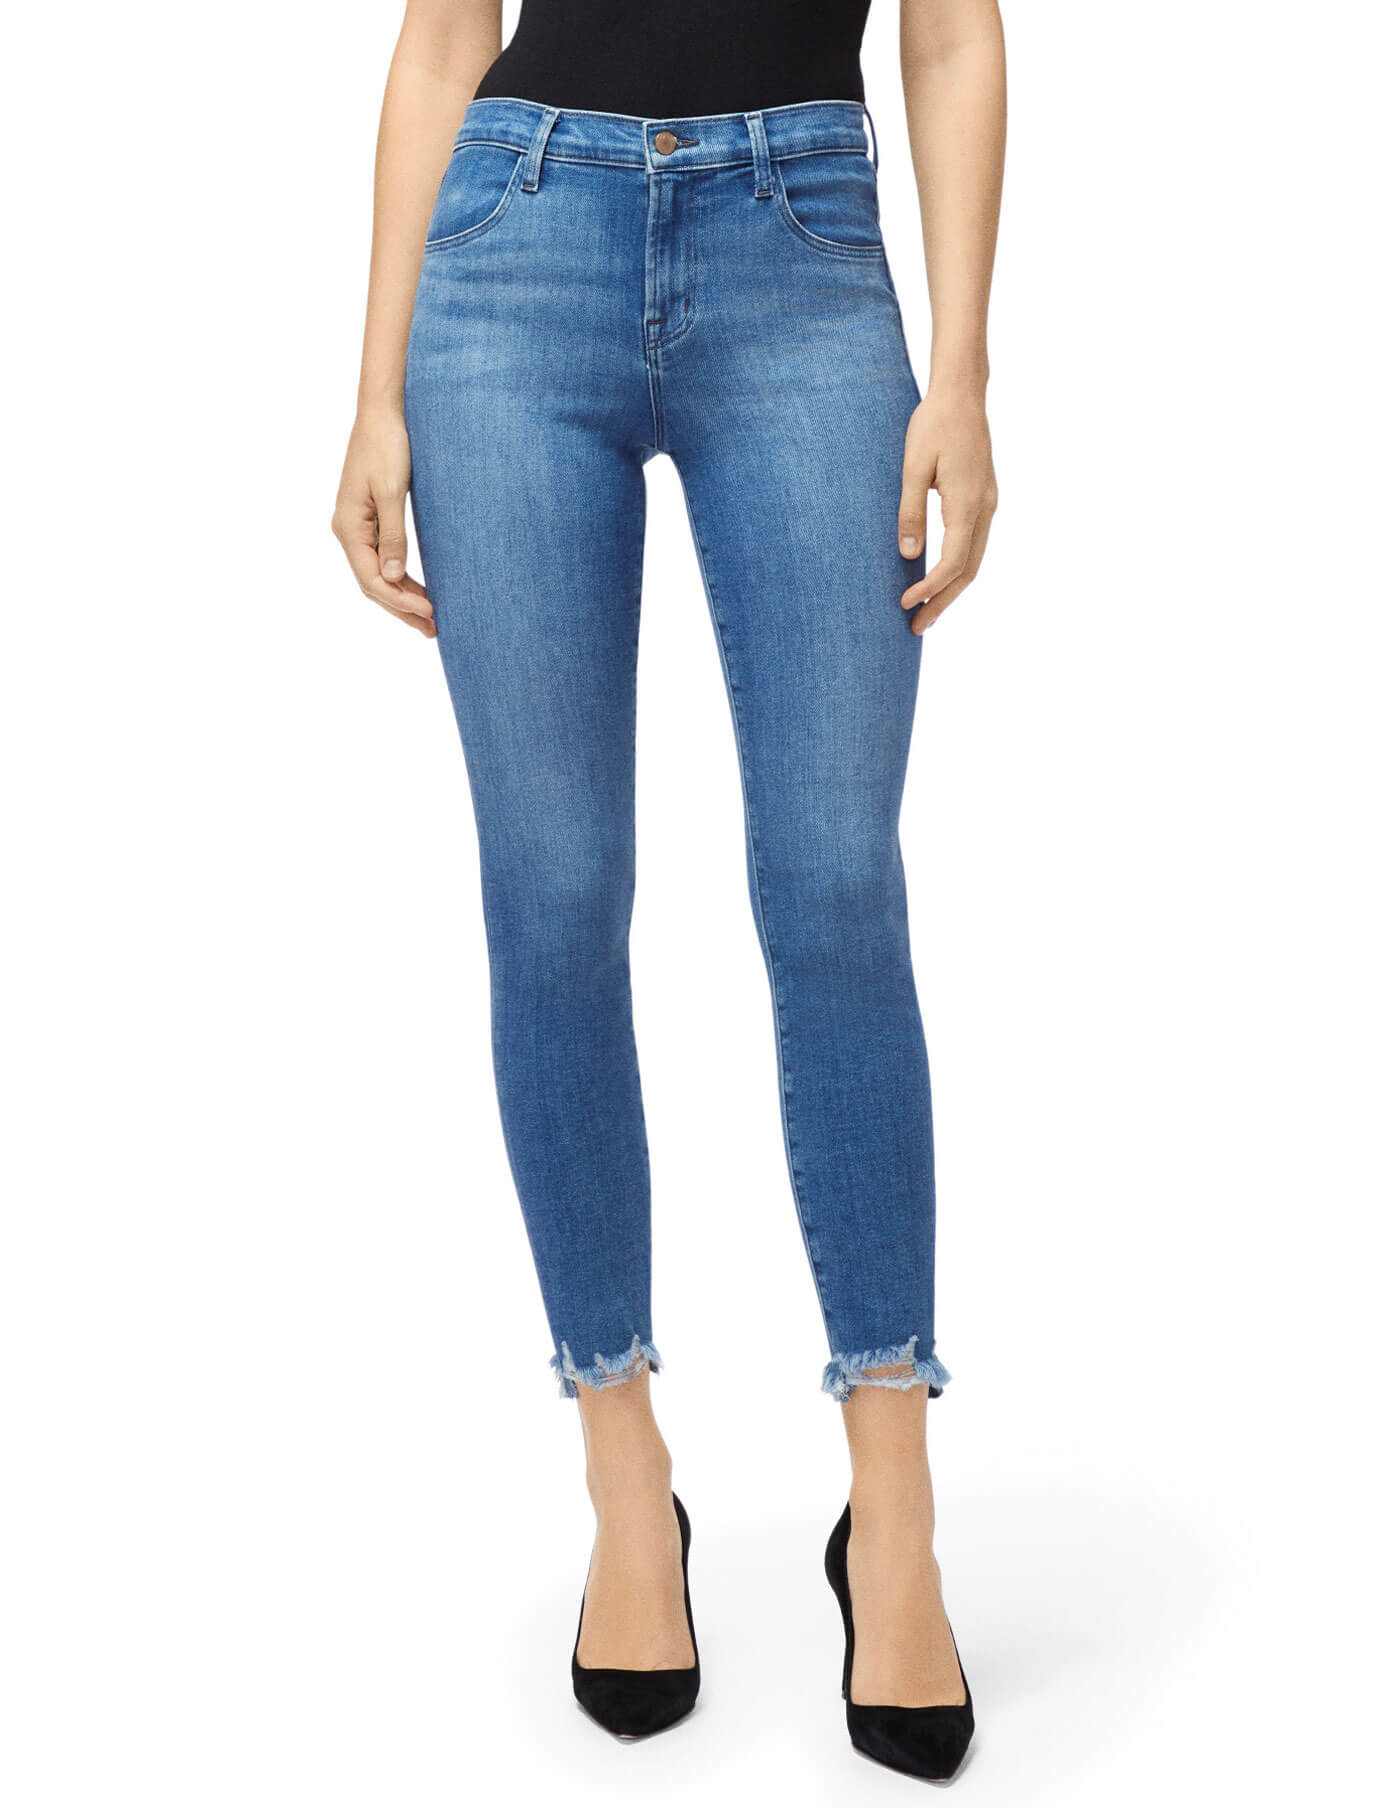 J Brand Mid-Rise Skinny Leg Jeans - Blue, 9 Rise Jeans, Clothing